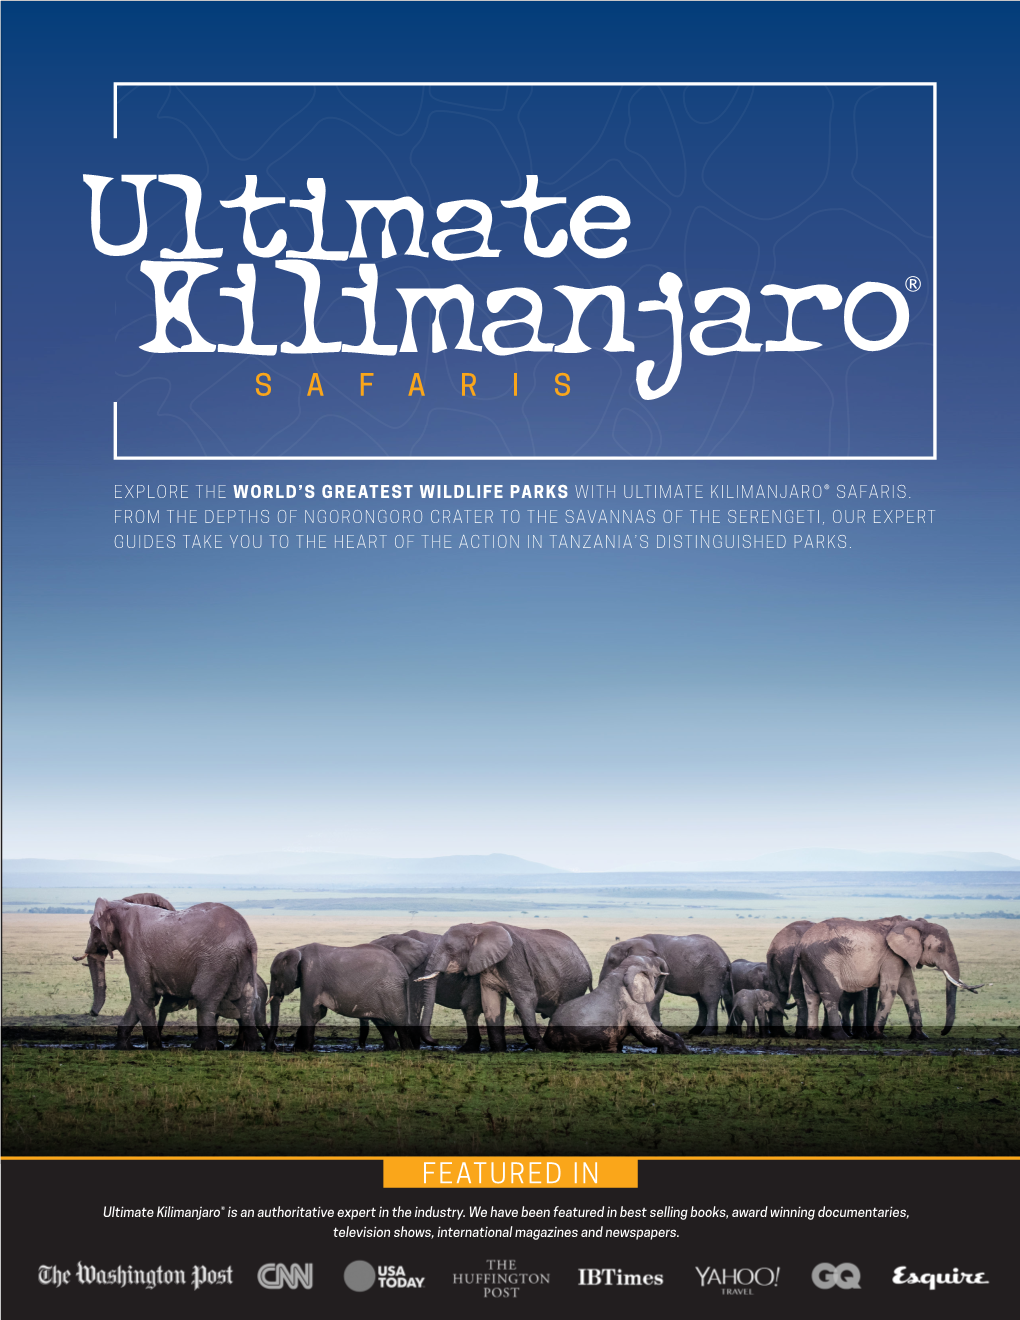 The Ultimate Kilimanjaro® Safari Guide